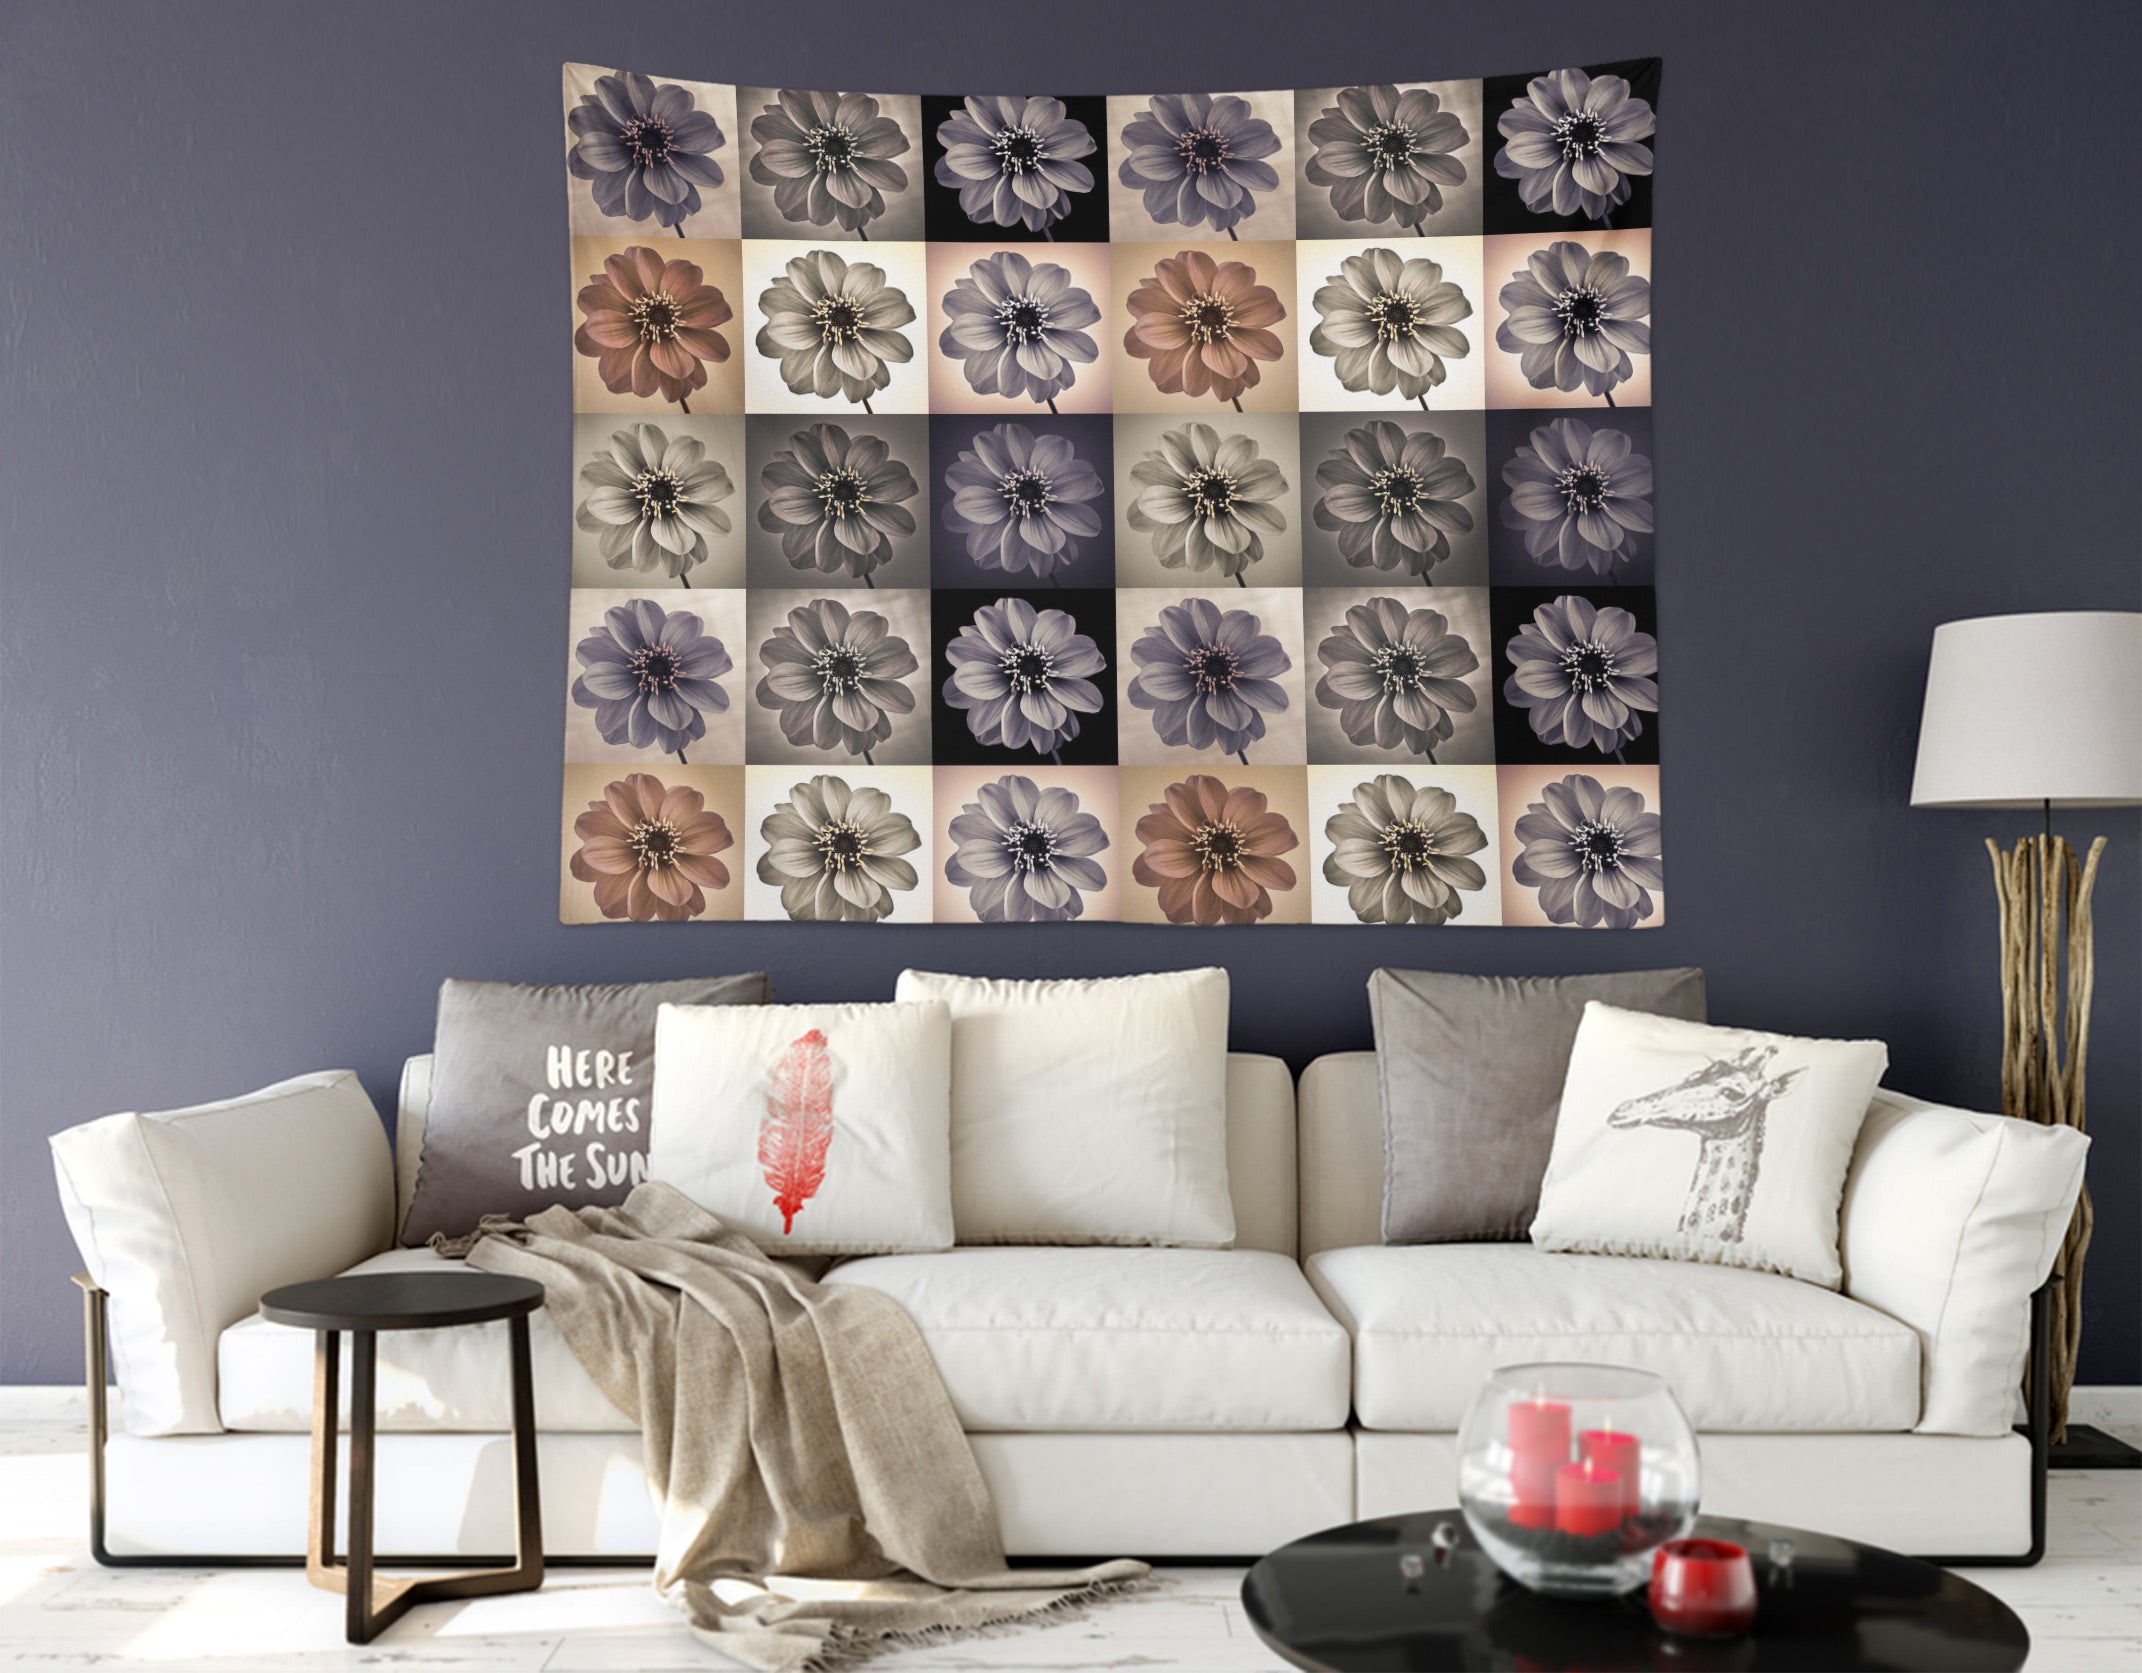 3D Square Lattice Flowers 11649 Assaf Frank Tapestry Hanging Cloth Hang